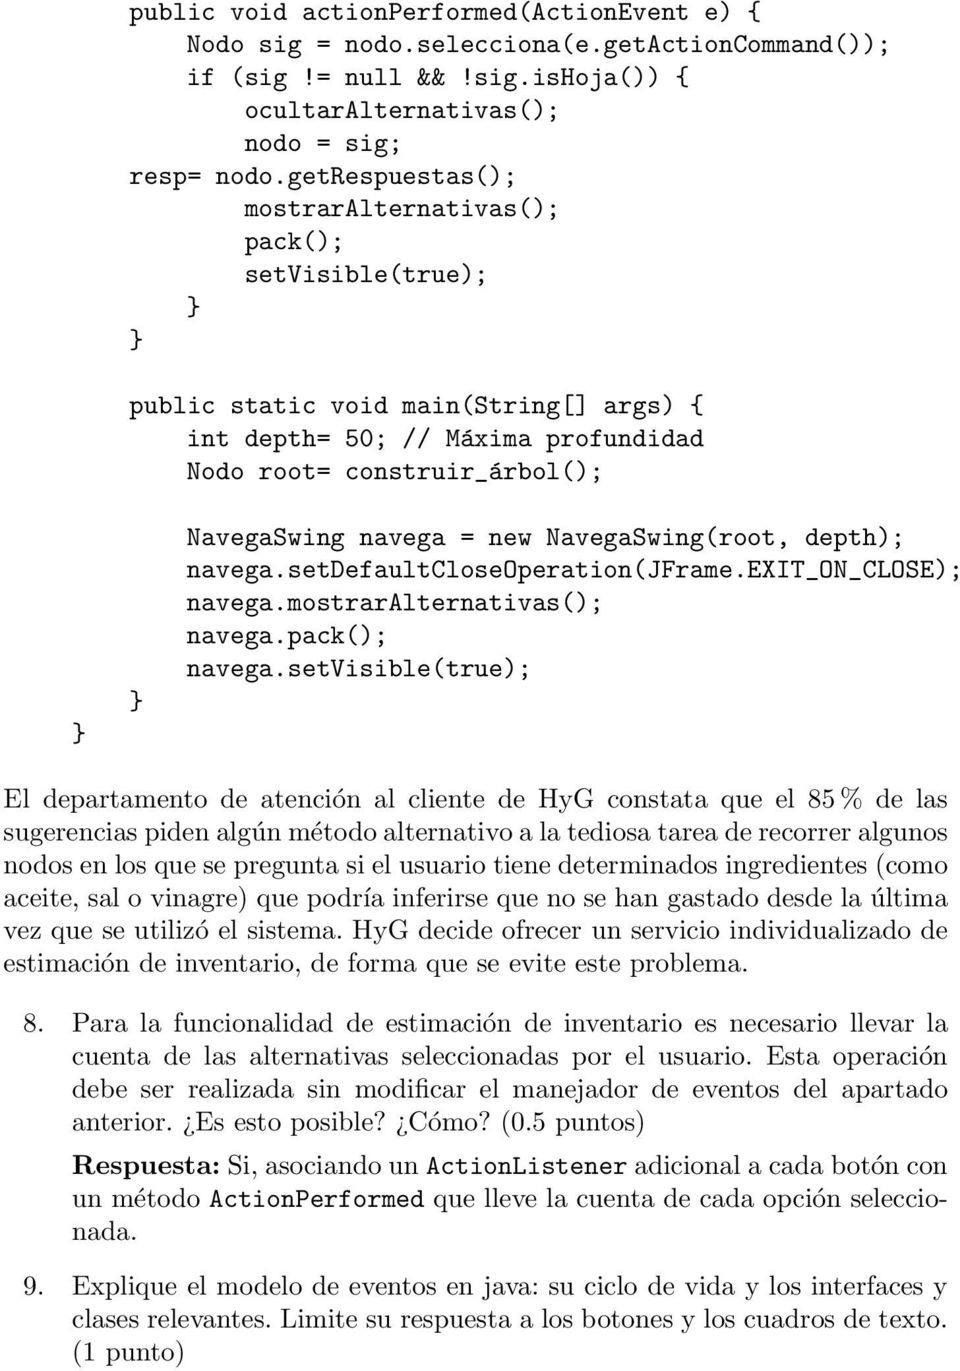 NavegaSwing(root, depth); navega.setdefaultcloseoperation(jframe.exit_on_close); navega.mostraralternativas(); navega.pack(); navega.